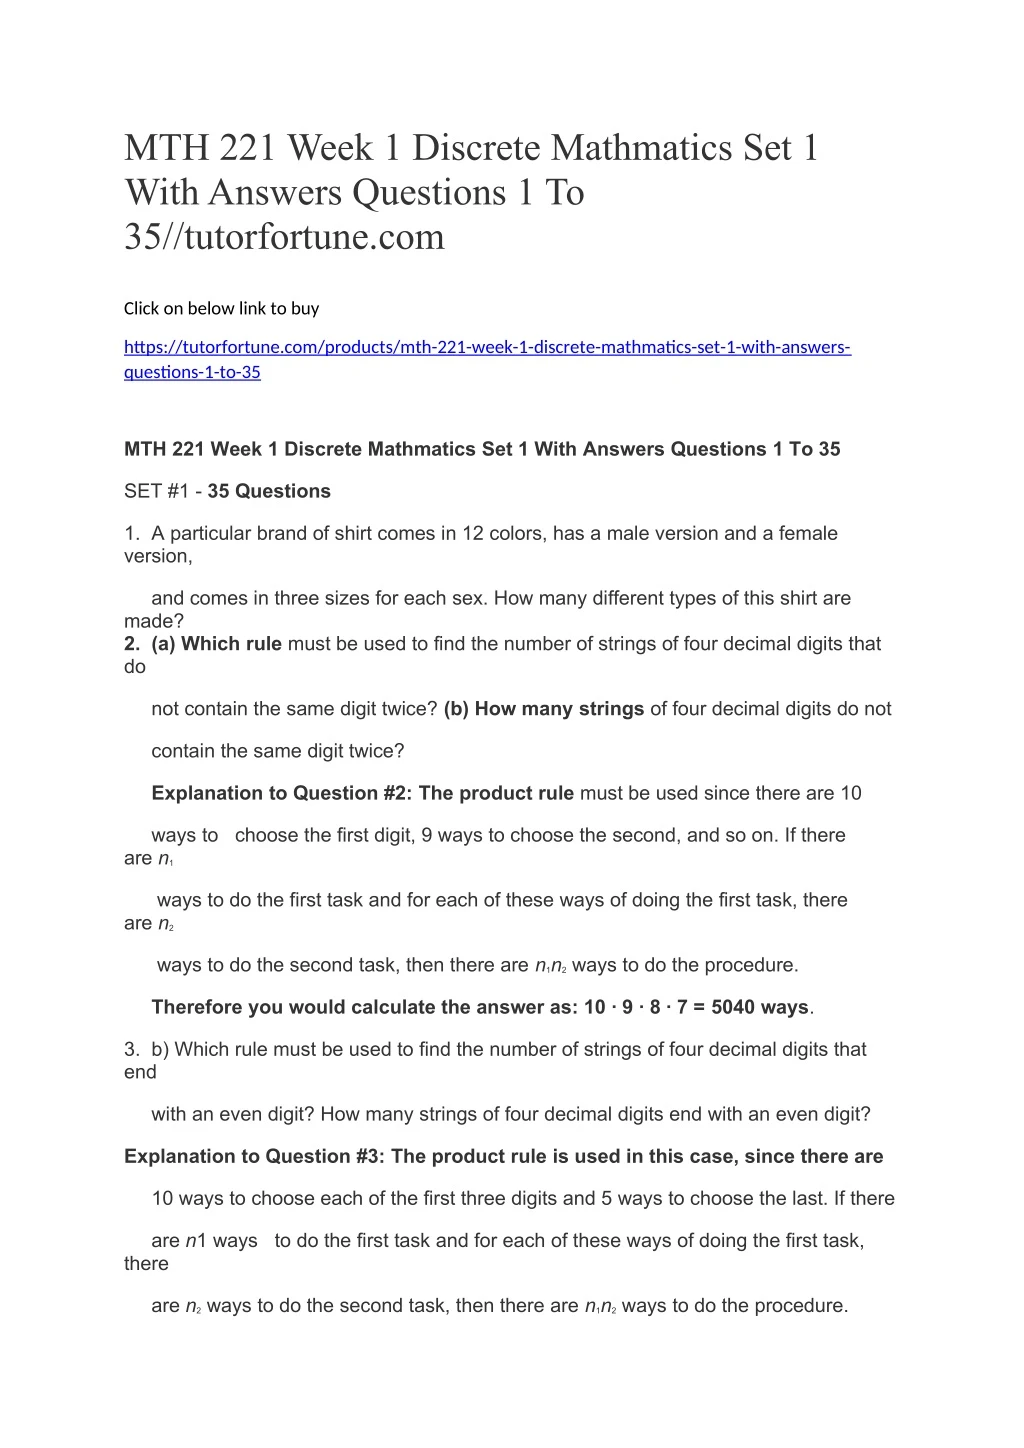 mth 221 week 1 discrete mathmatics set 1 with